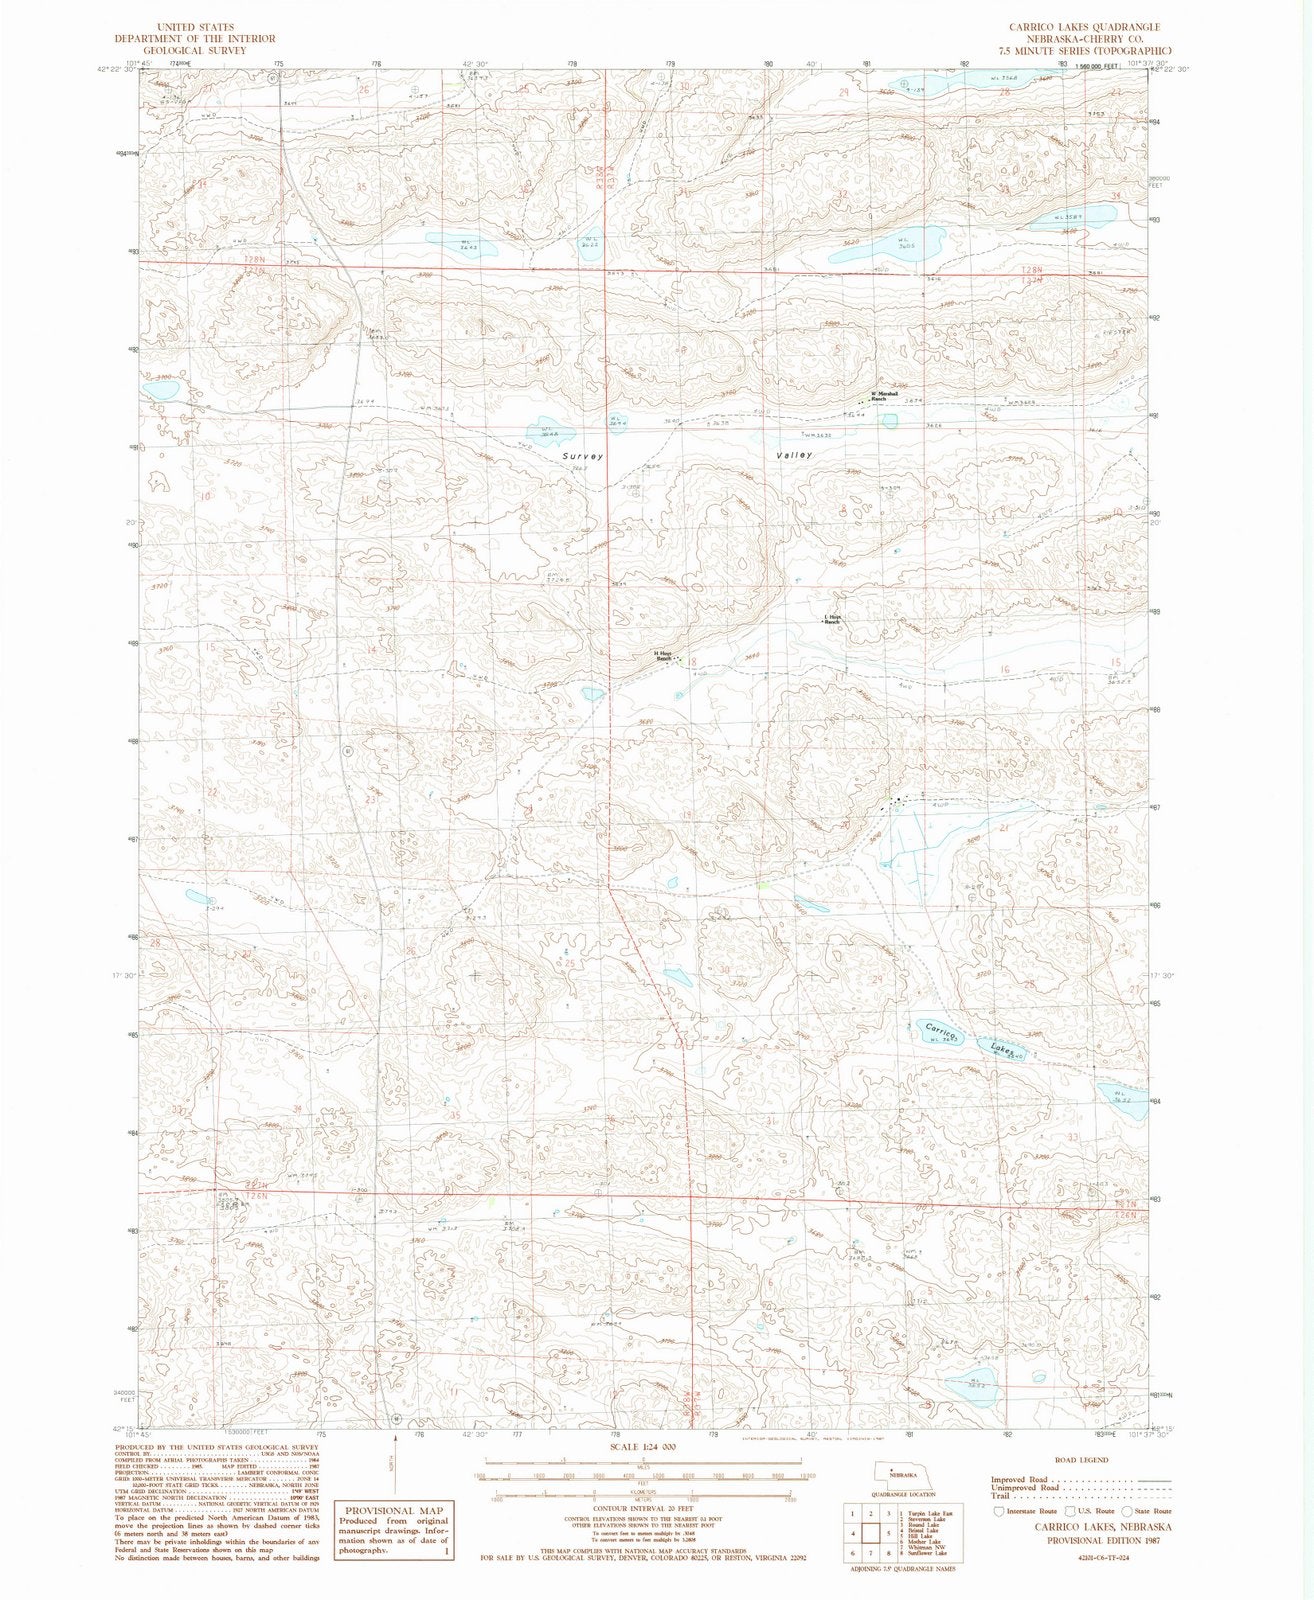 1987 Carrico Lakes, NE - Nebraska - USGS Topographic Map